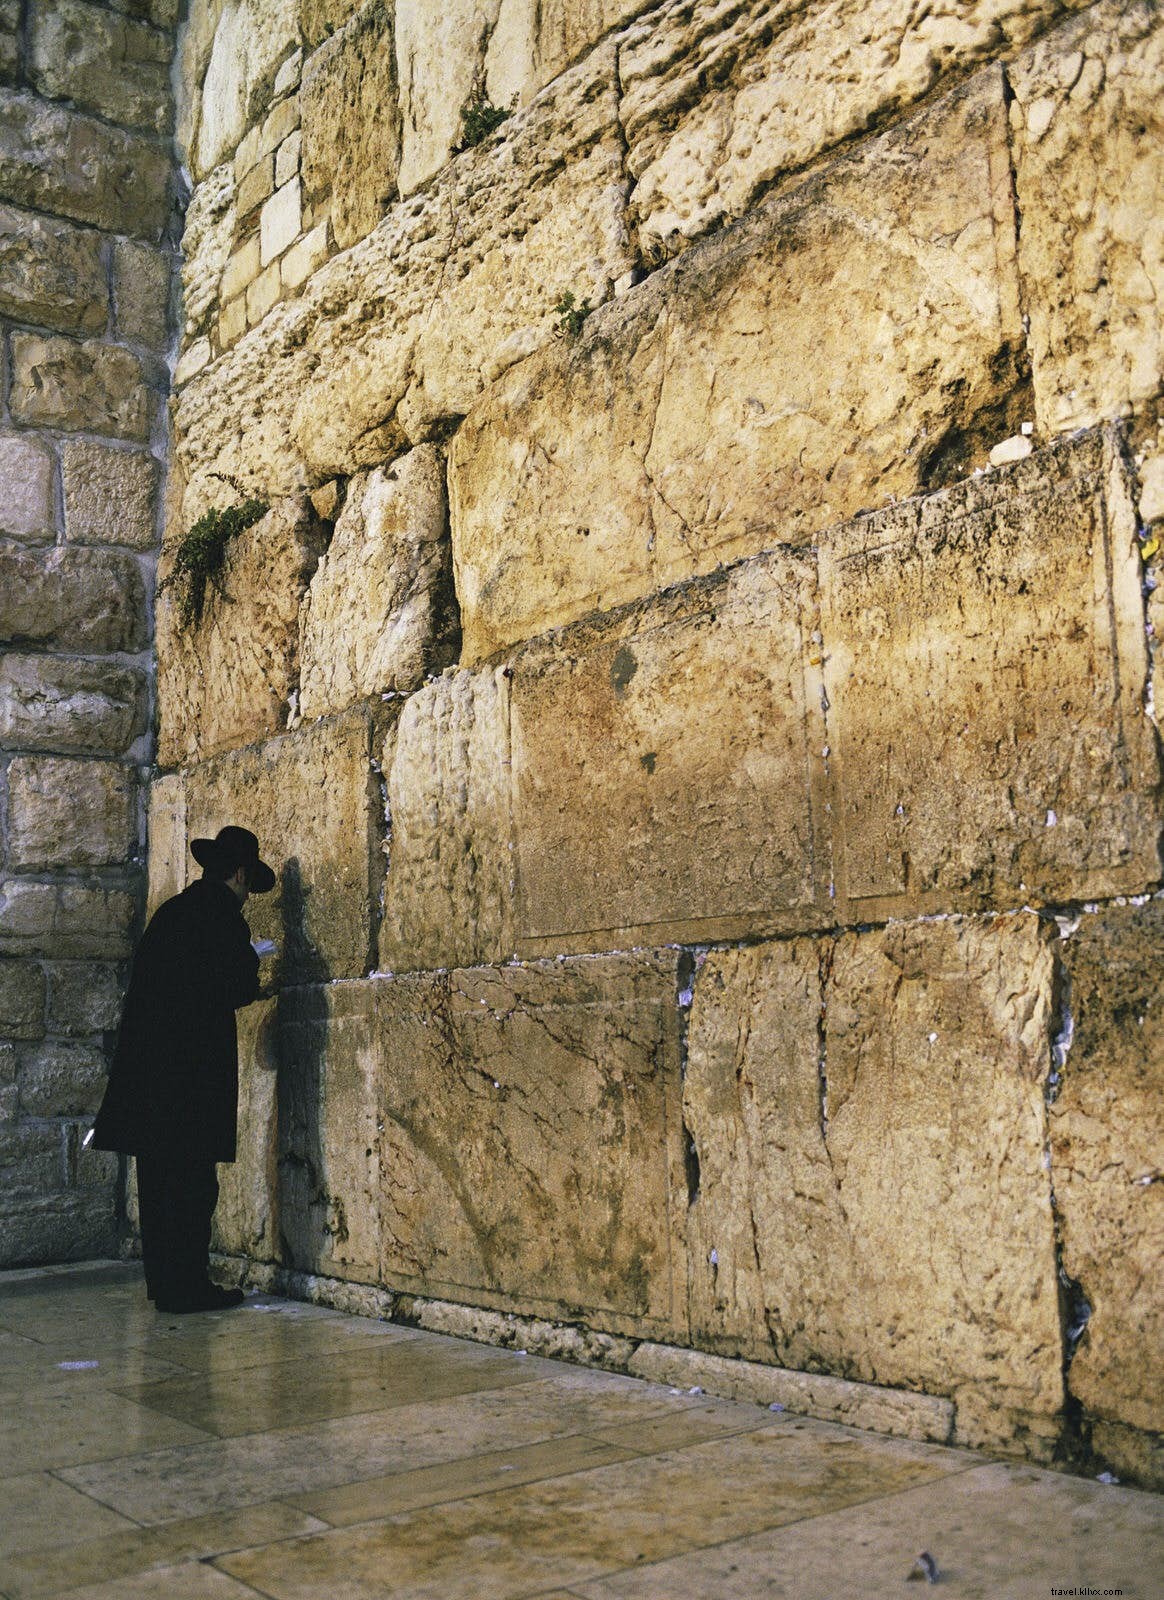 I migliori consigli per un autentica esperienza di Shabbat a Gerusalemme 